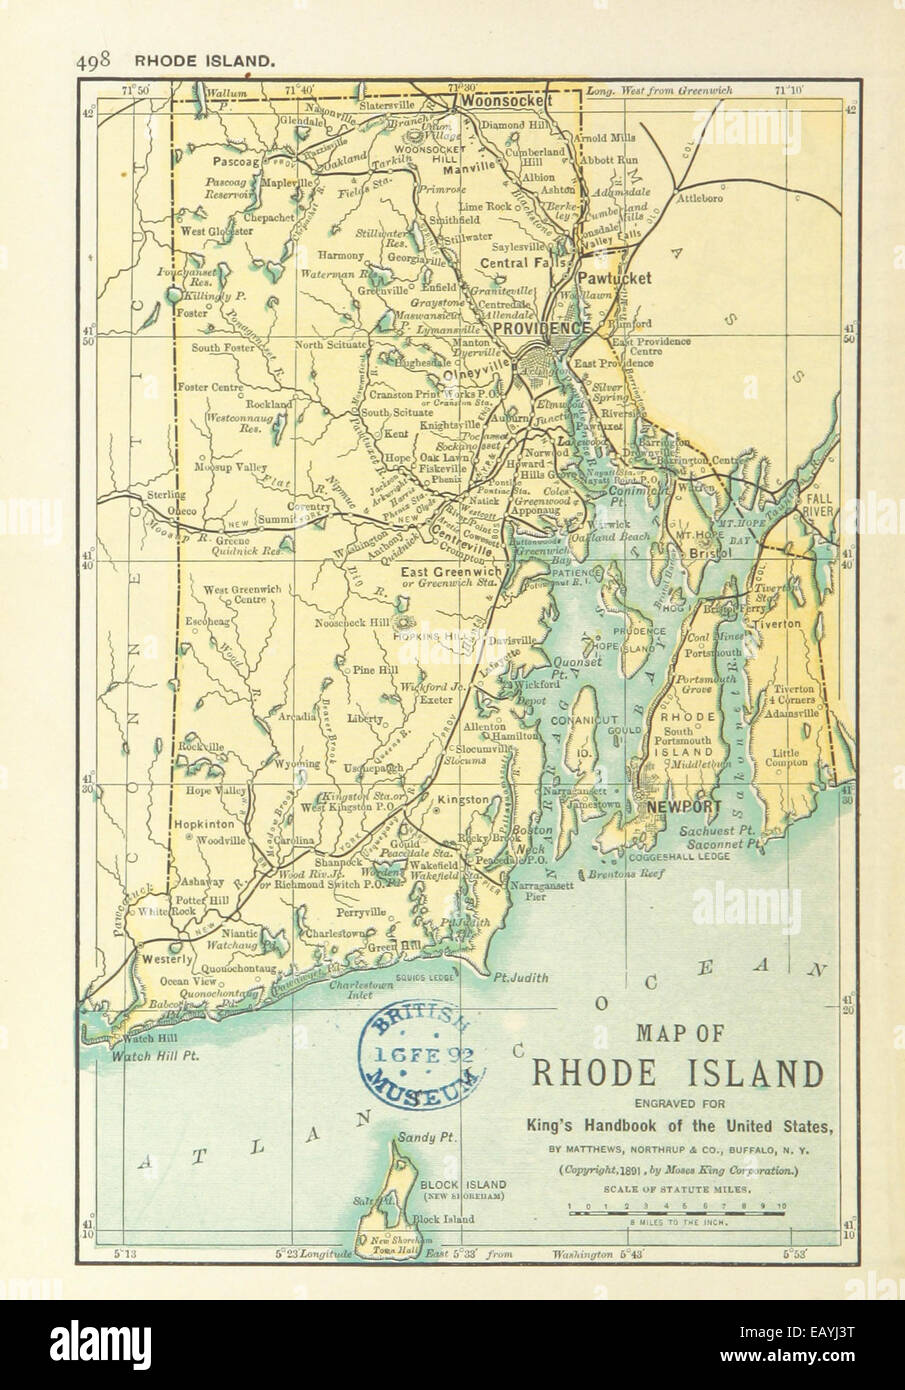 US-MAPS(1891) p500 - MAP OF RHODE ISLAND Stock Photo